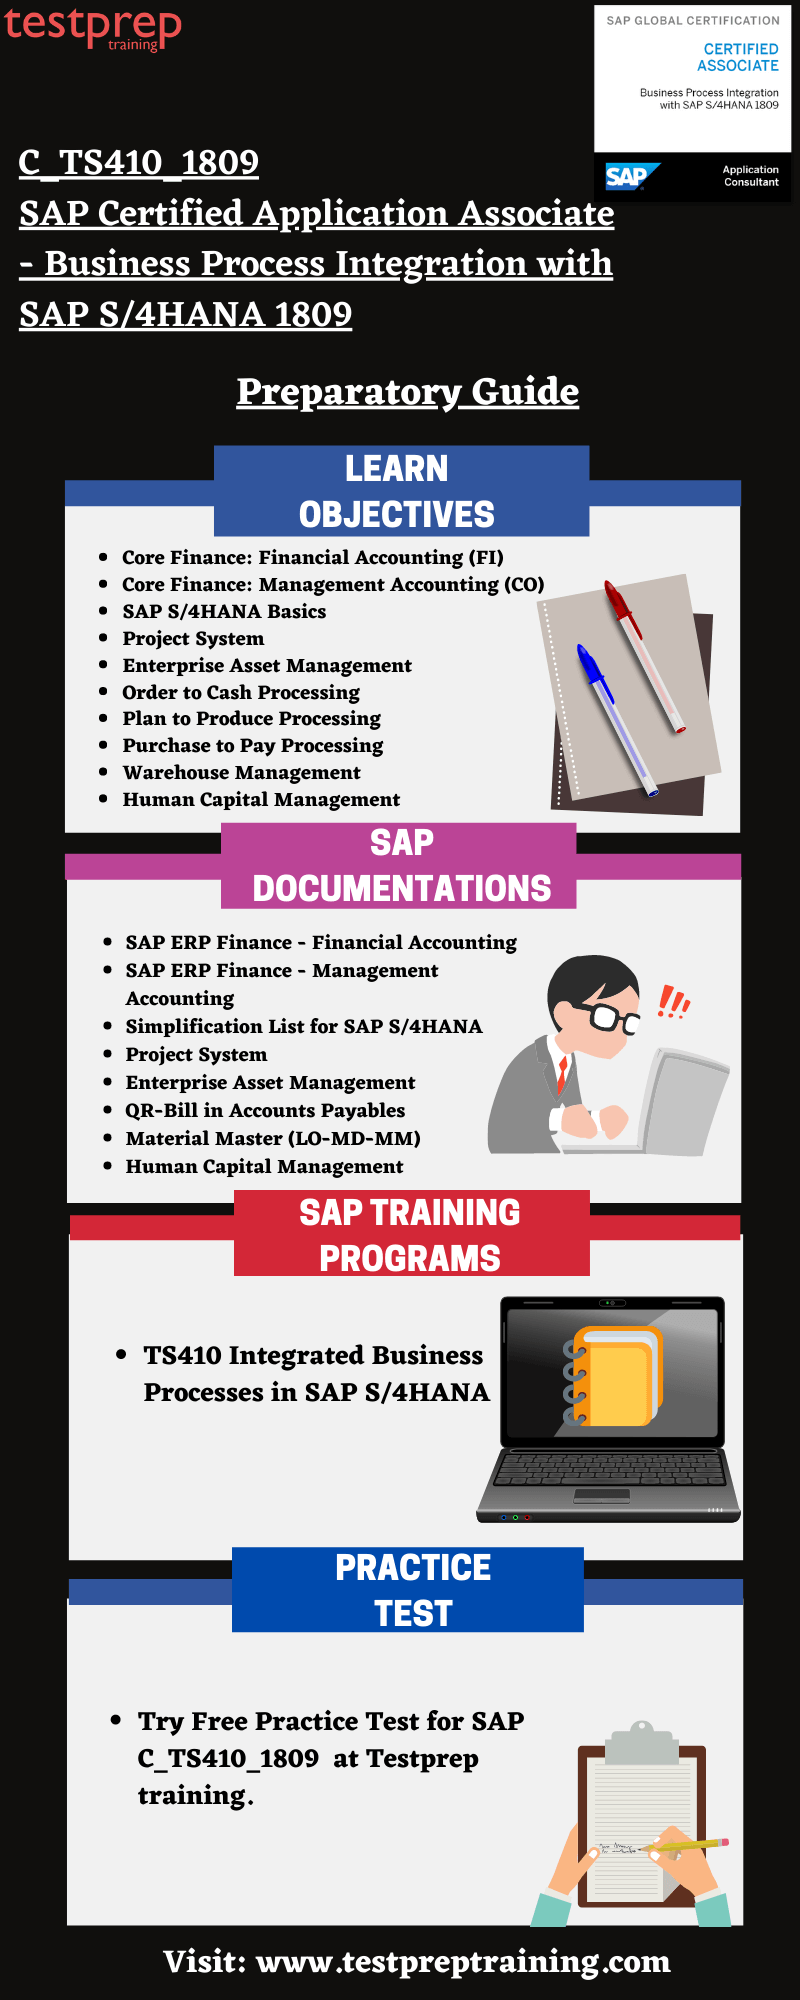 SAP C_TS410_1809 preparatory guide 